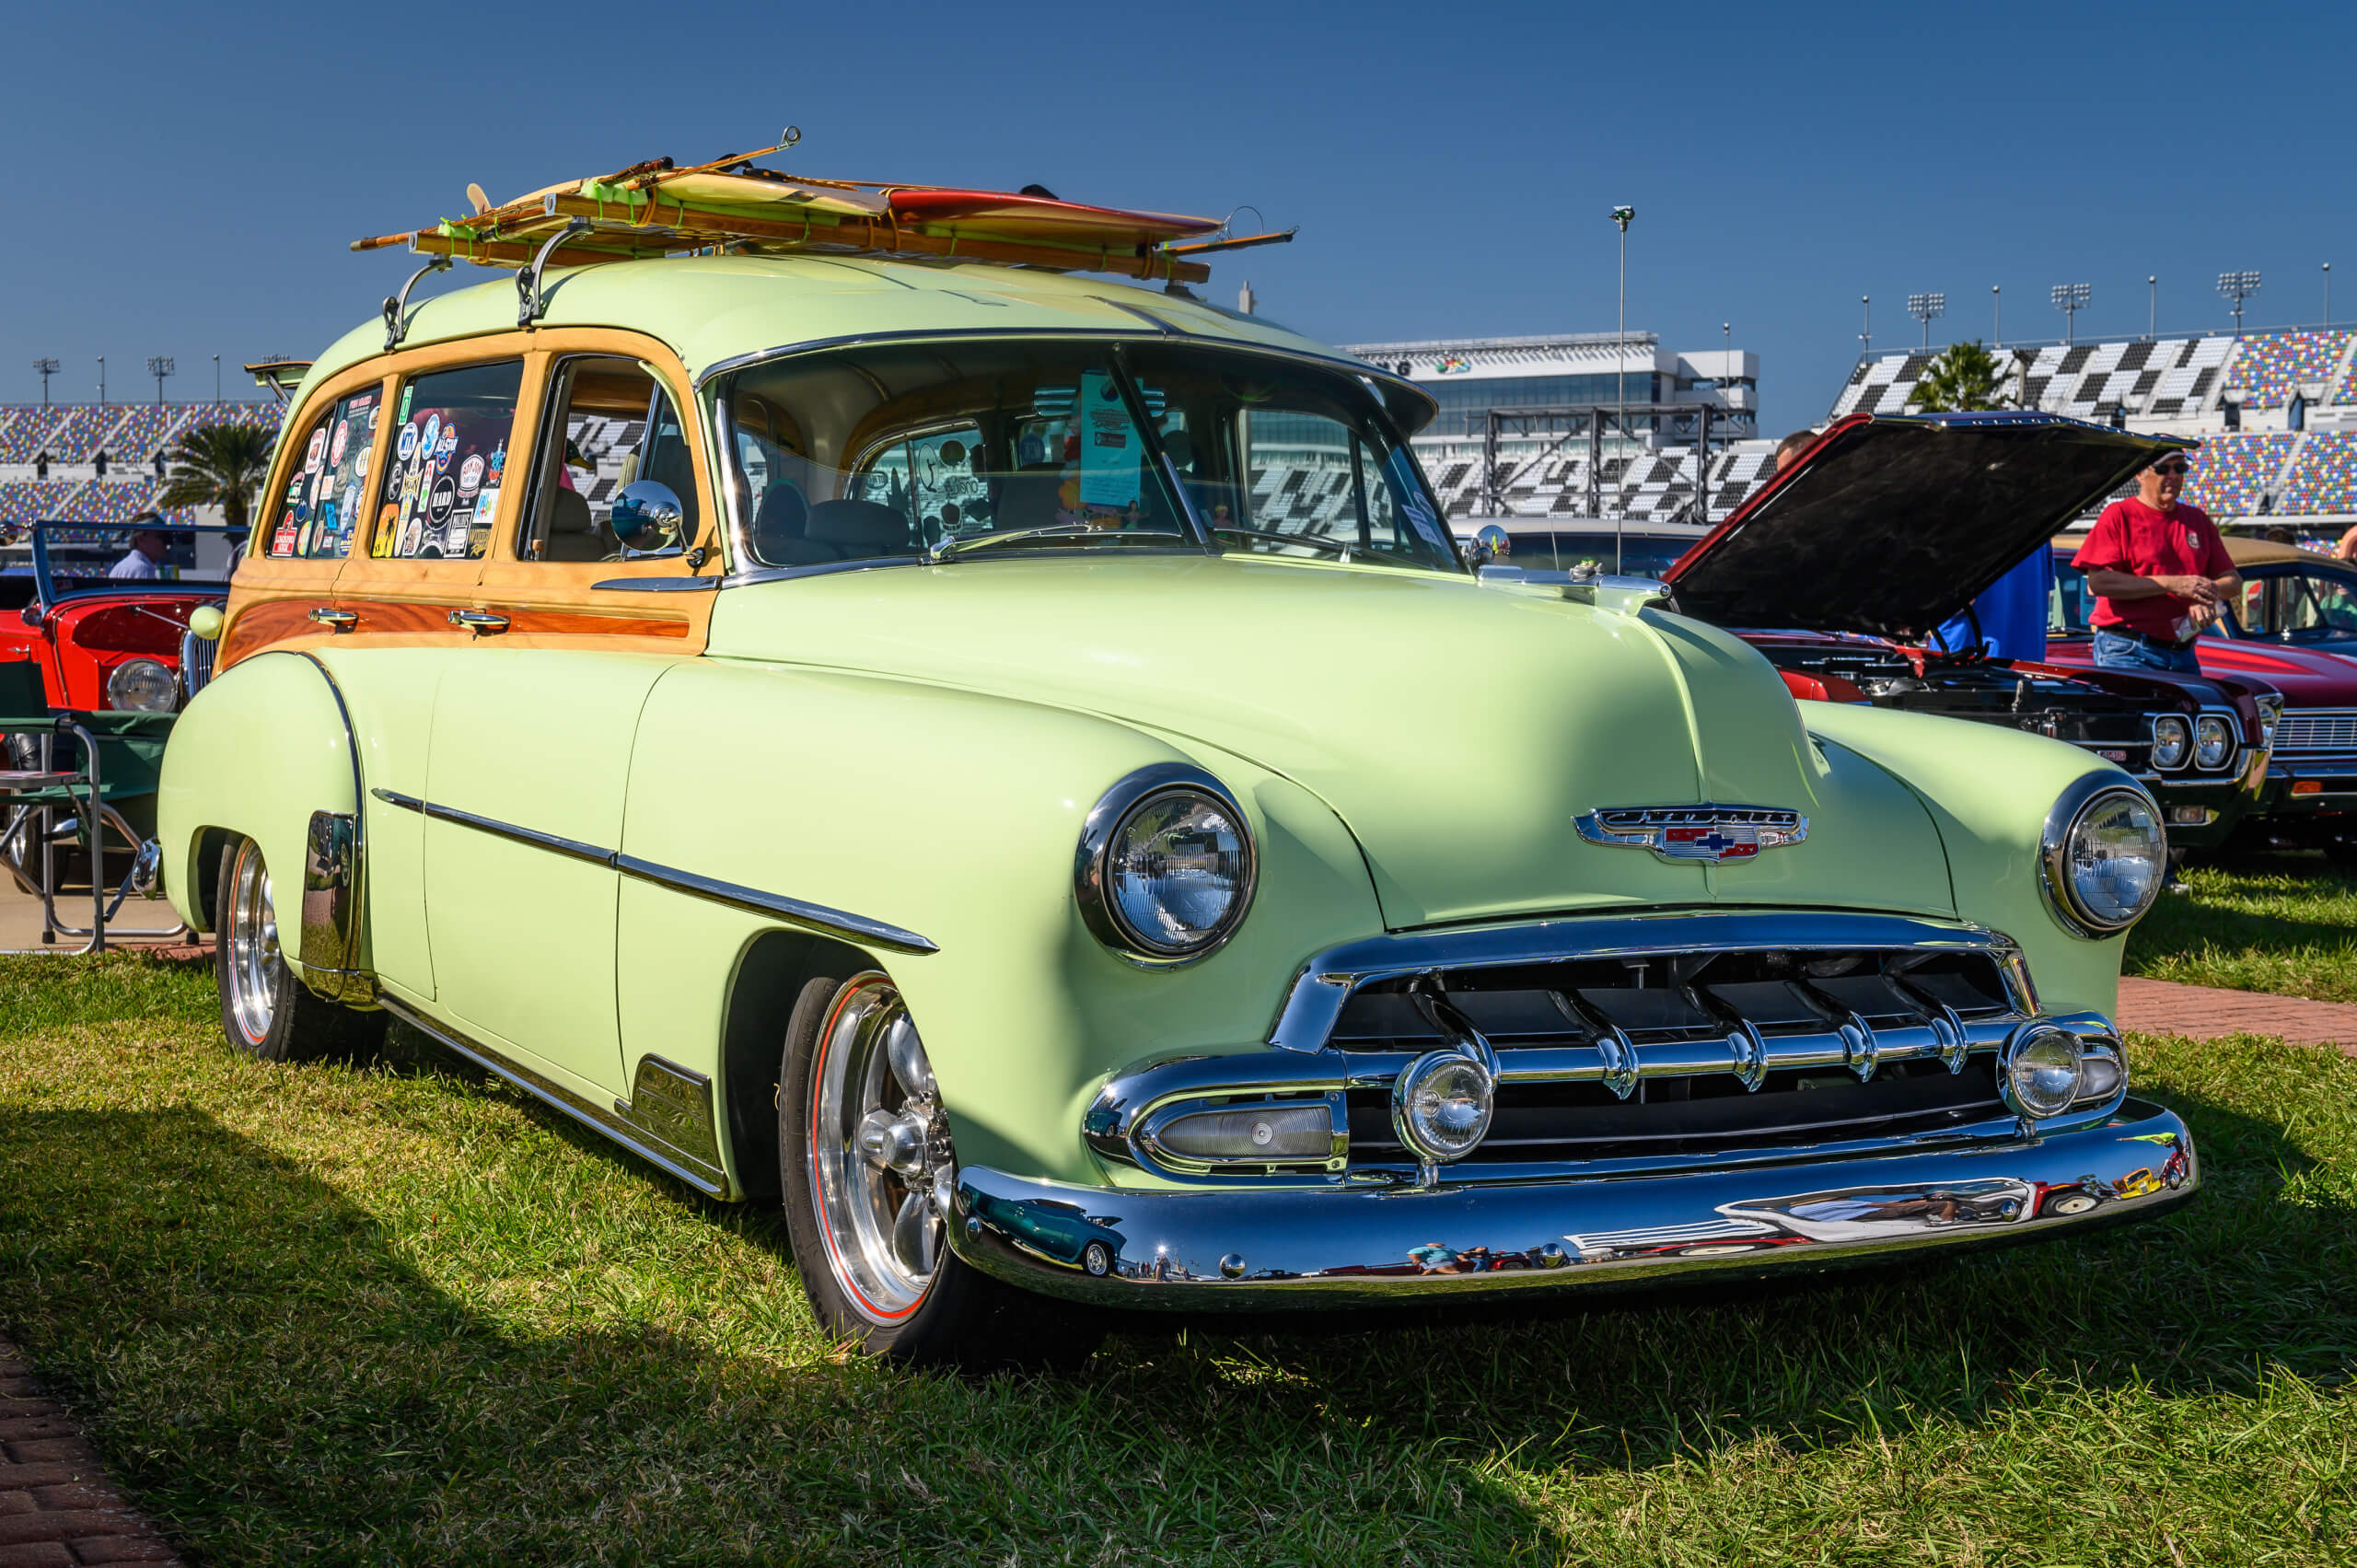 This 1952 Chevrolet Tin Woodie was displayed at the 46th Annual Daytona Turkey Run, in Daytona, Florida.